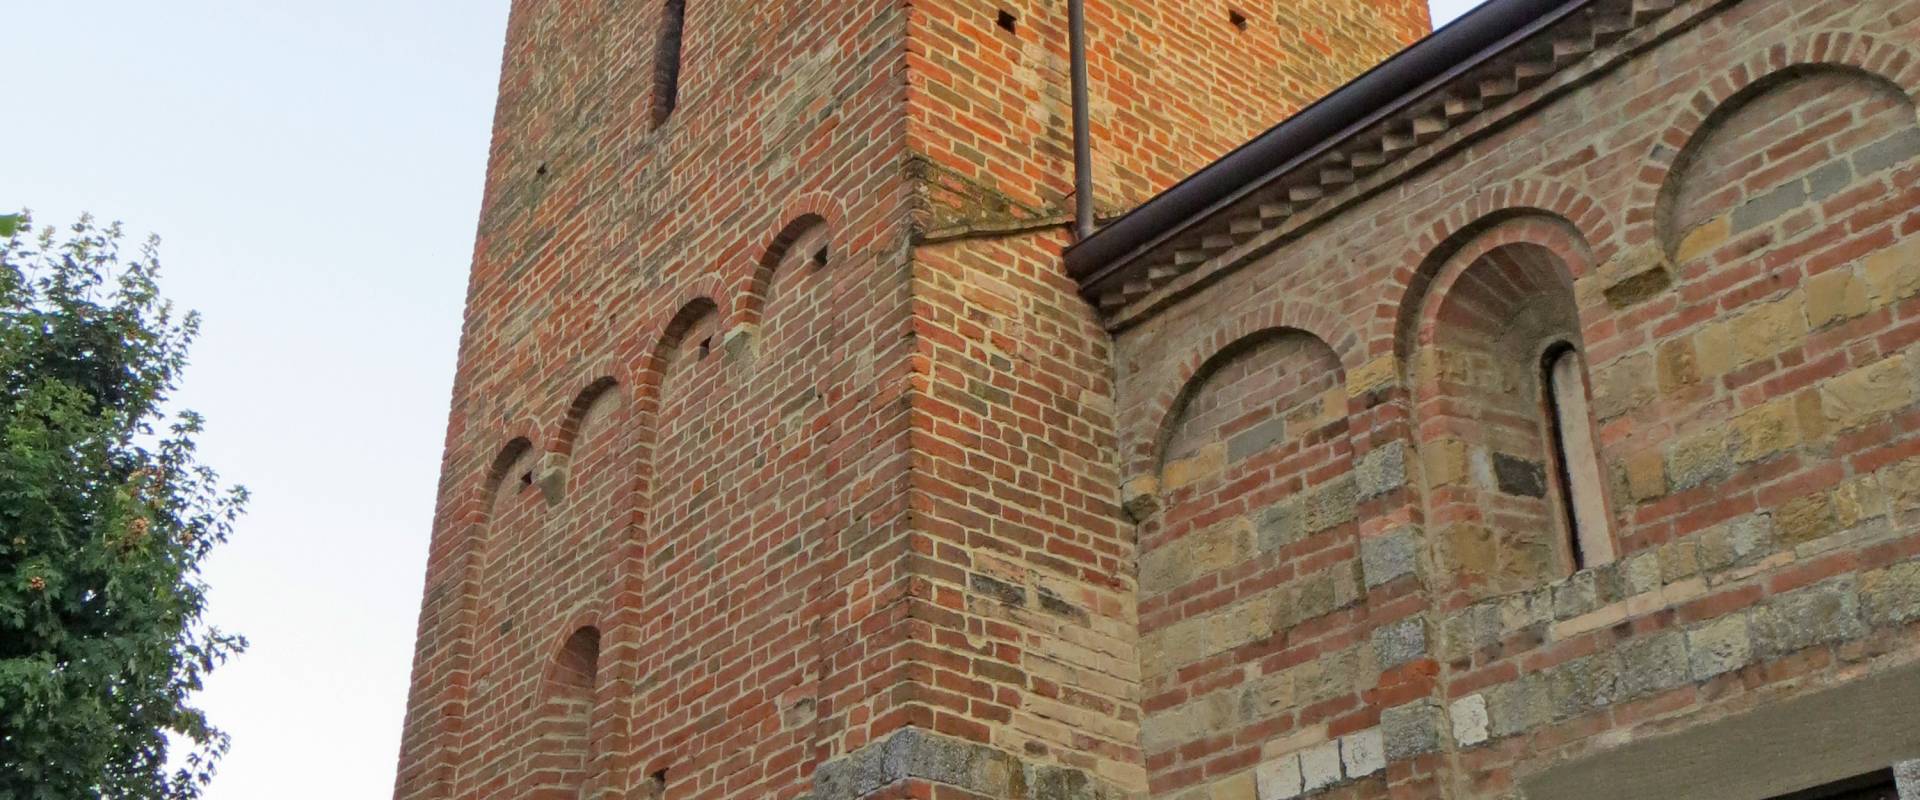 Pieve di San Biagio (Talignano, Sala Baganza) - campanile 2019-09-16 photo by Parma198